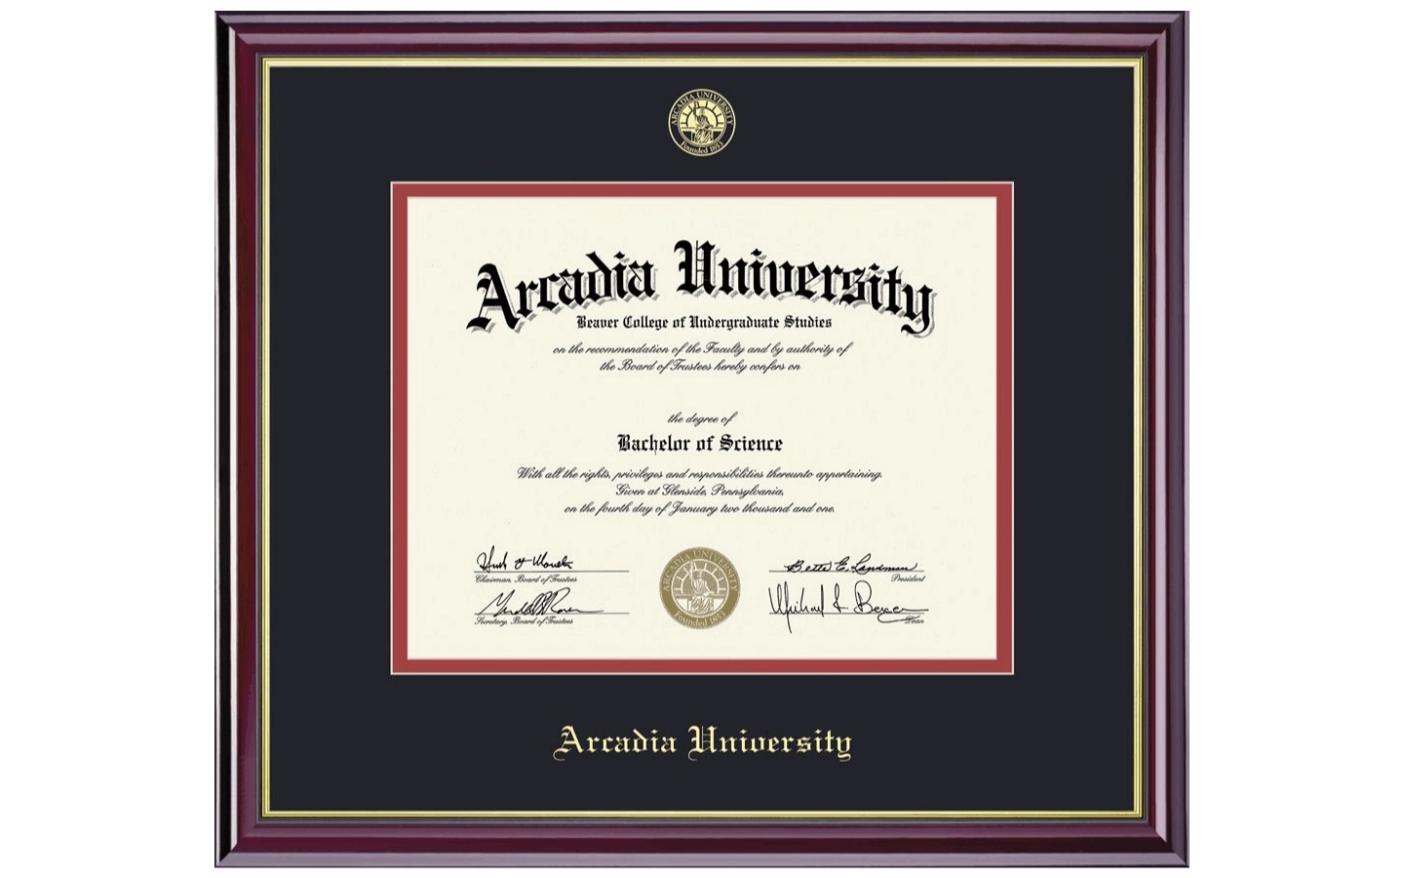 A framed diploma from Arcadia University